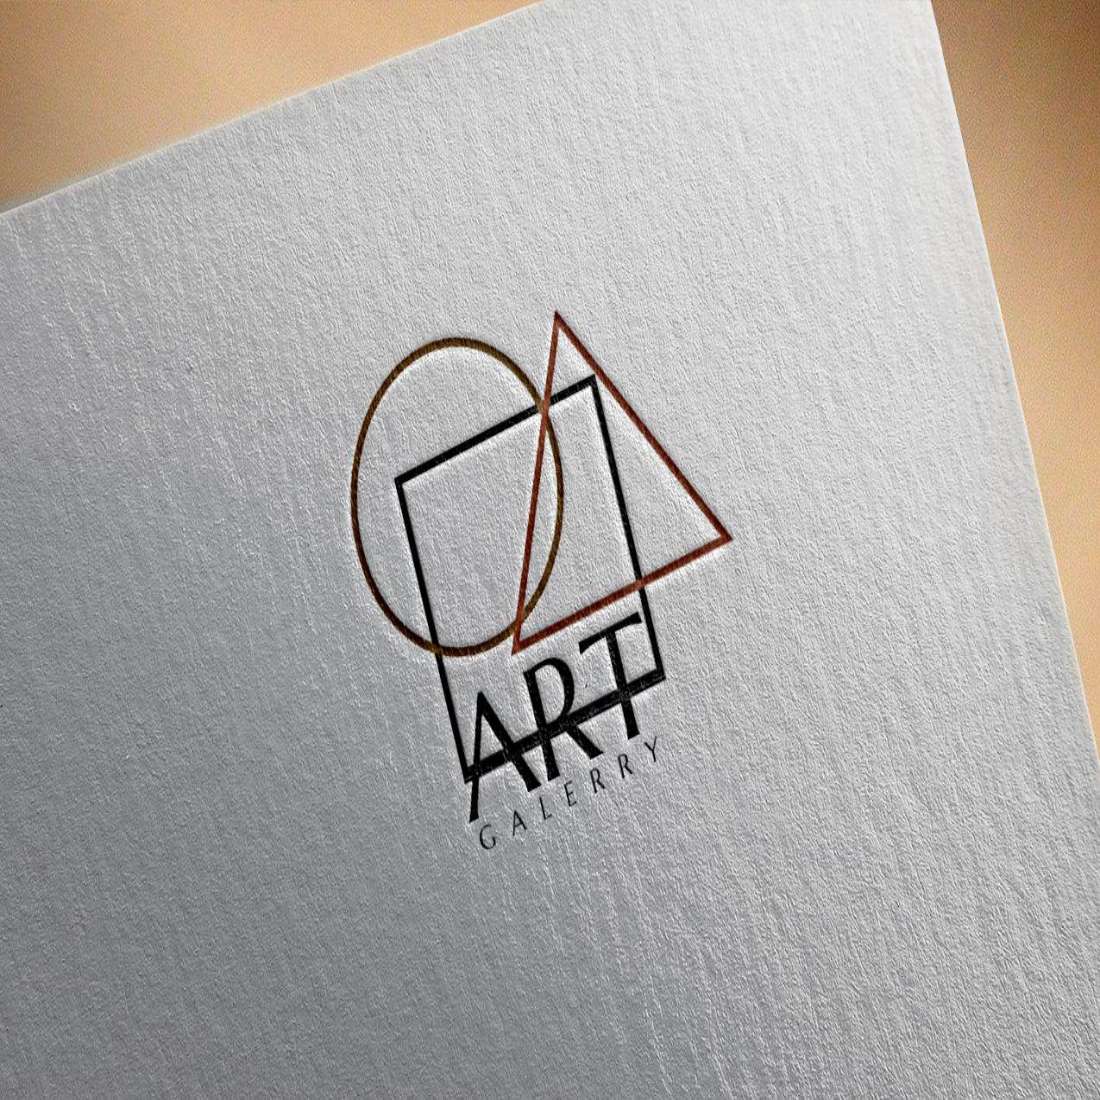 Elegant Art Gallery Logo Design cover image.